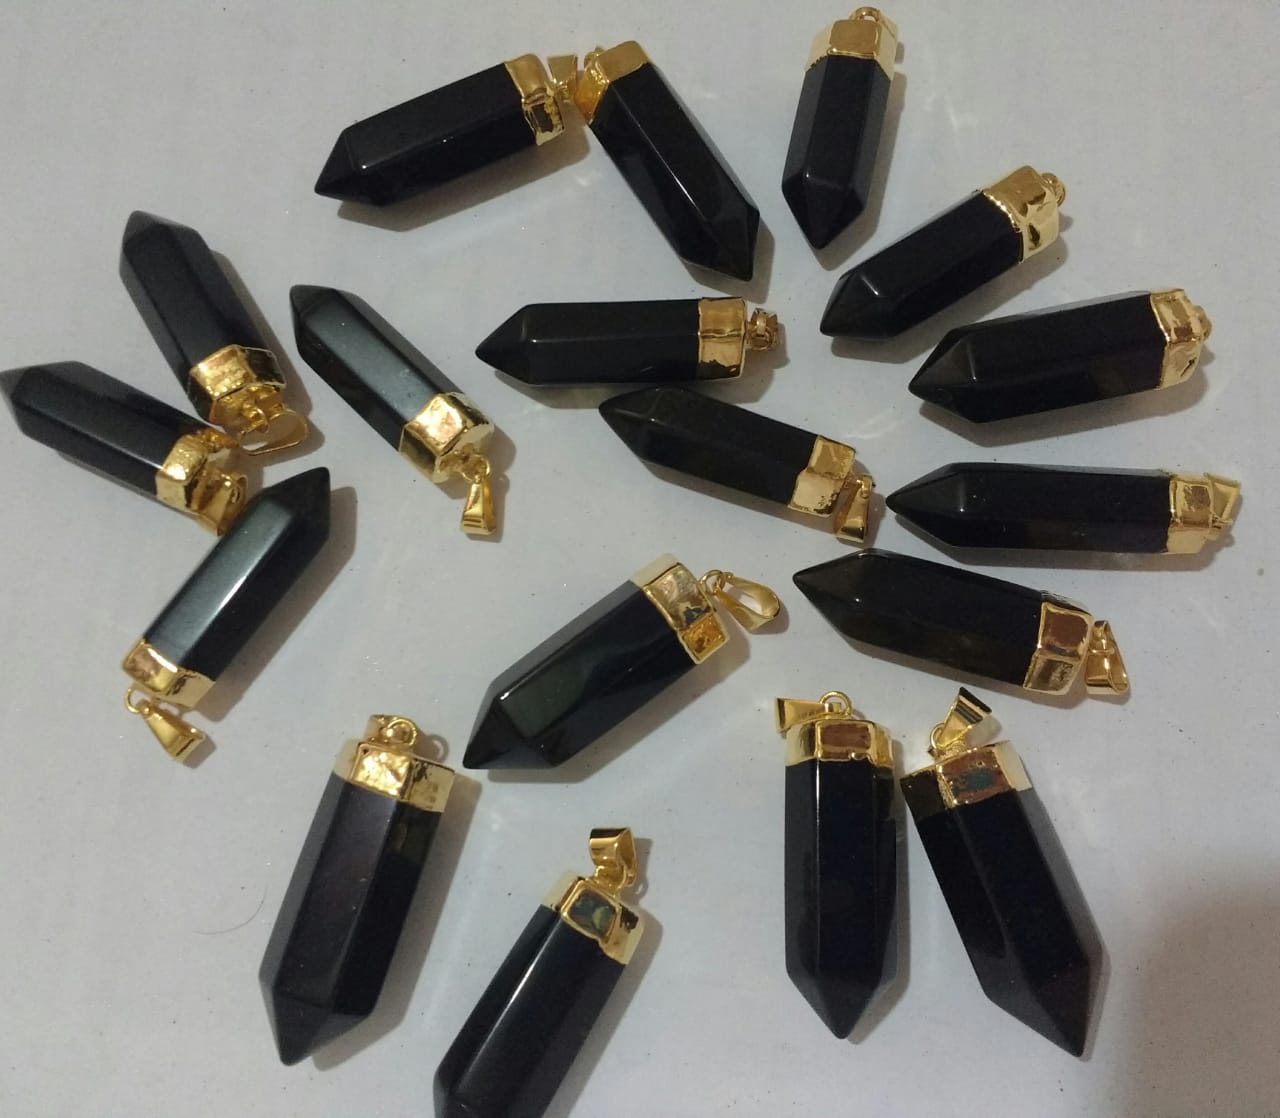 Stones from Uruguay - Black Obsidian Pendumum Points, 30mm